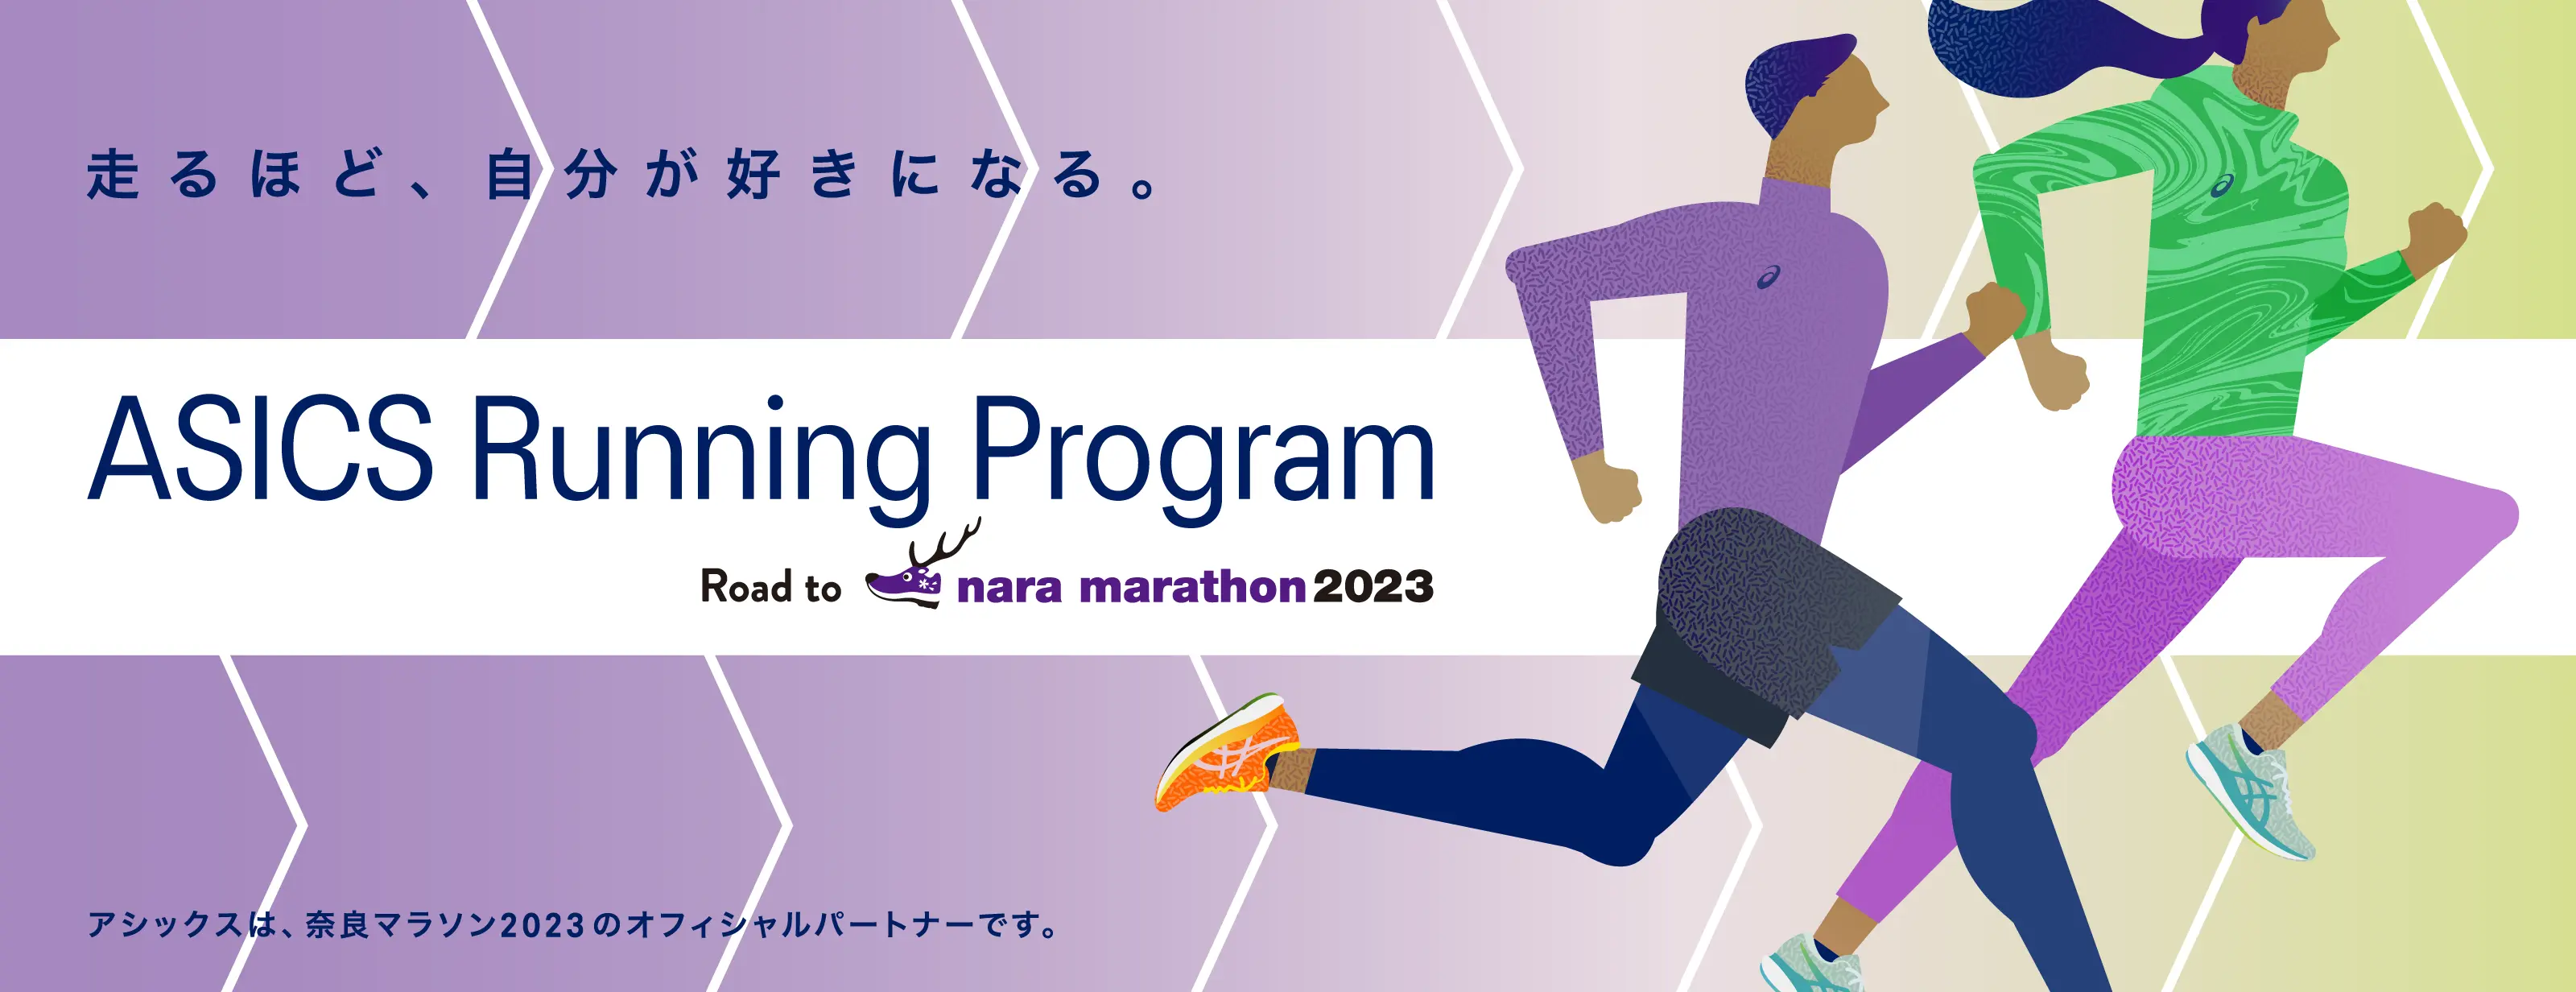 ASICS RUNNING PROGRAM Road to 奈良マラソン2023